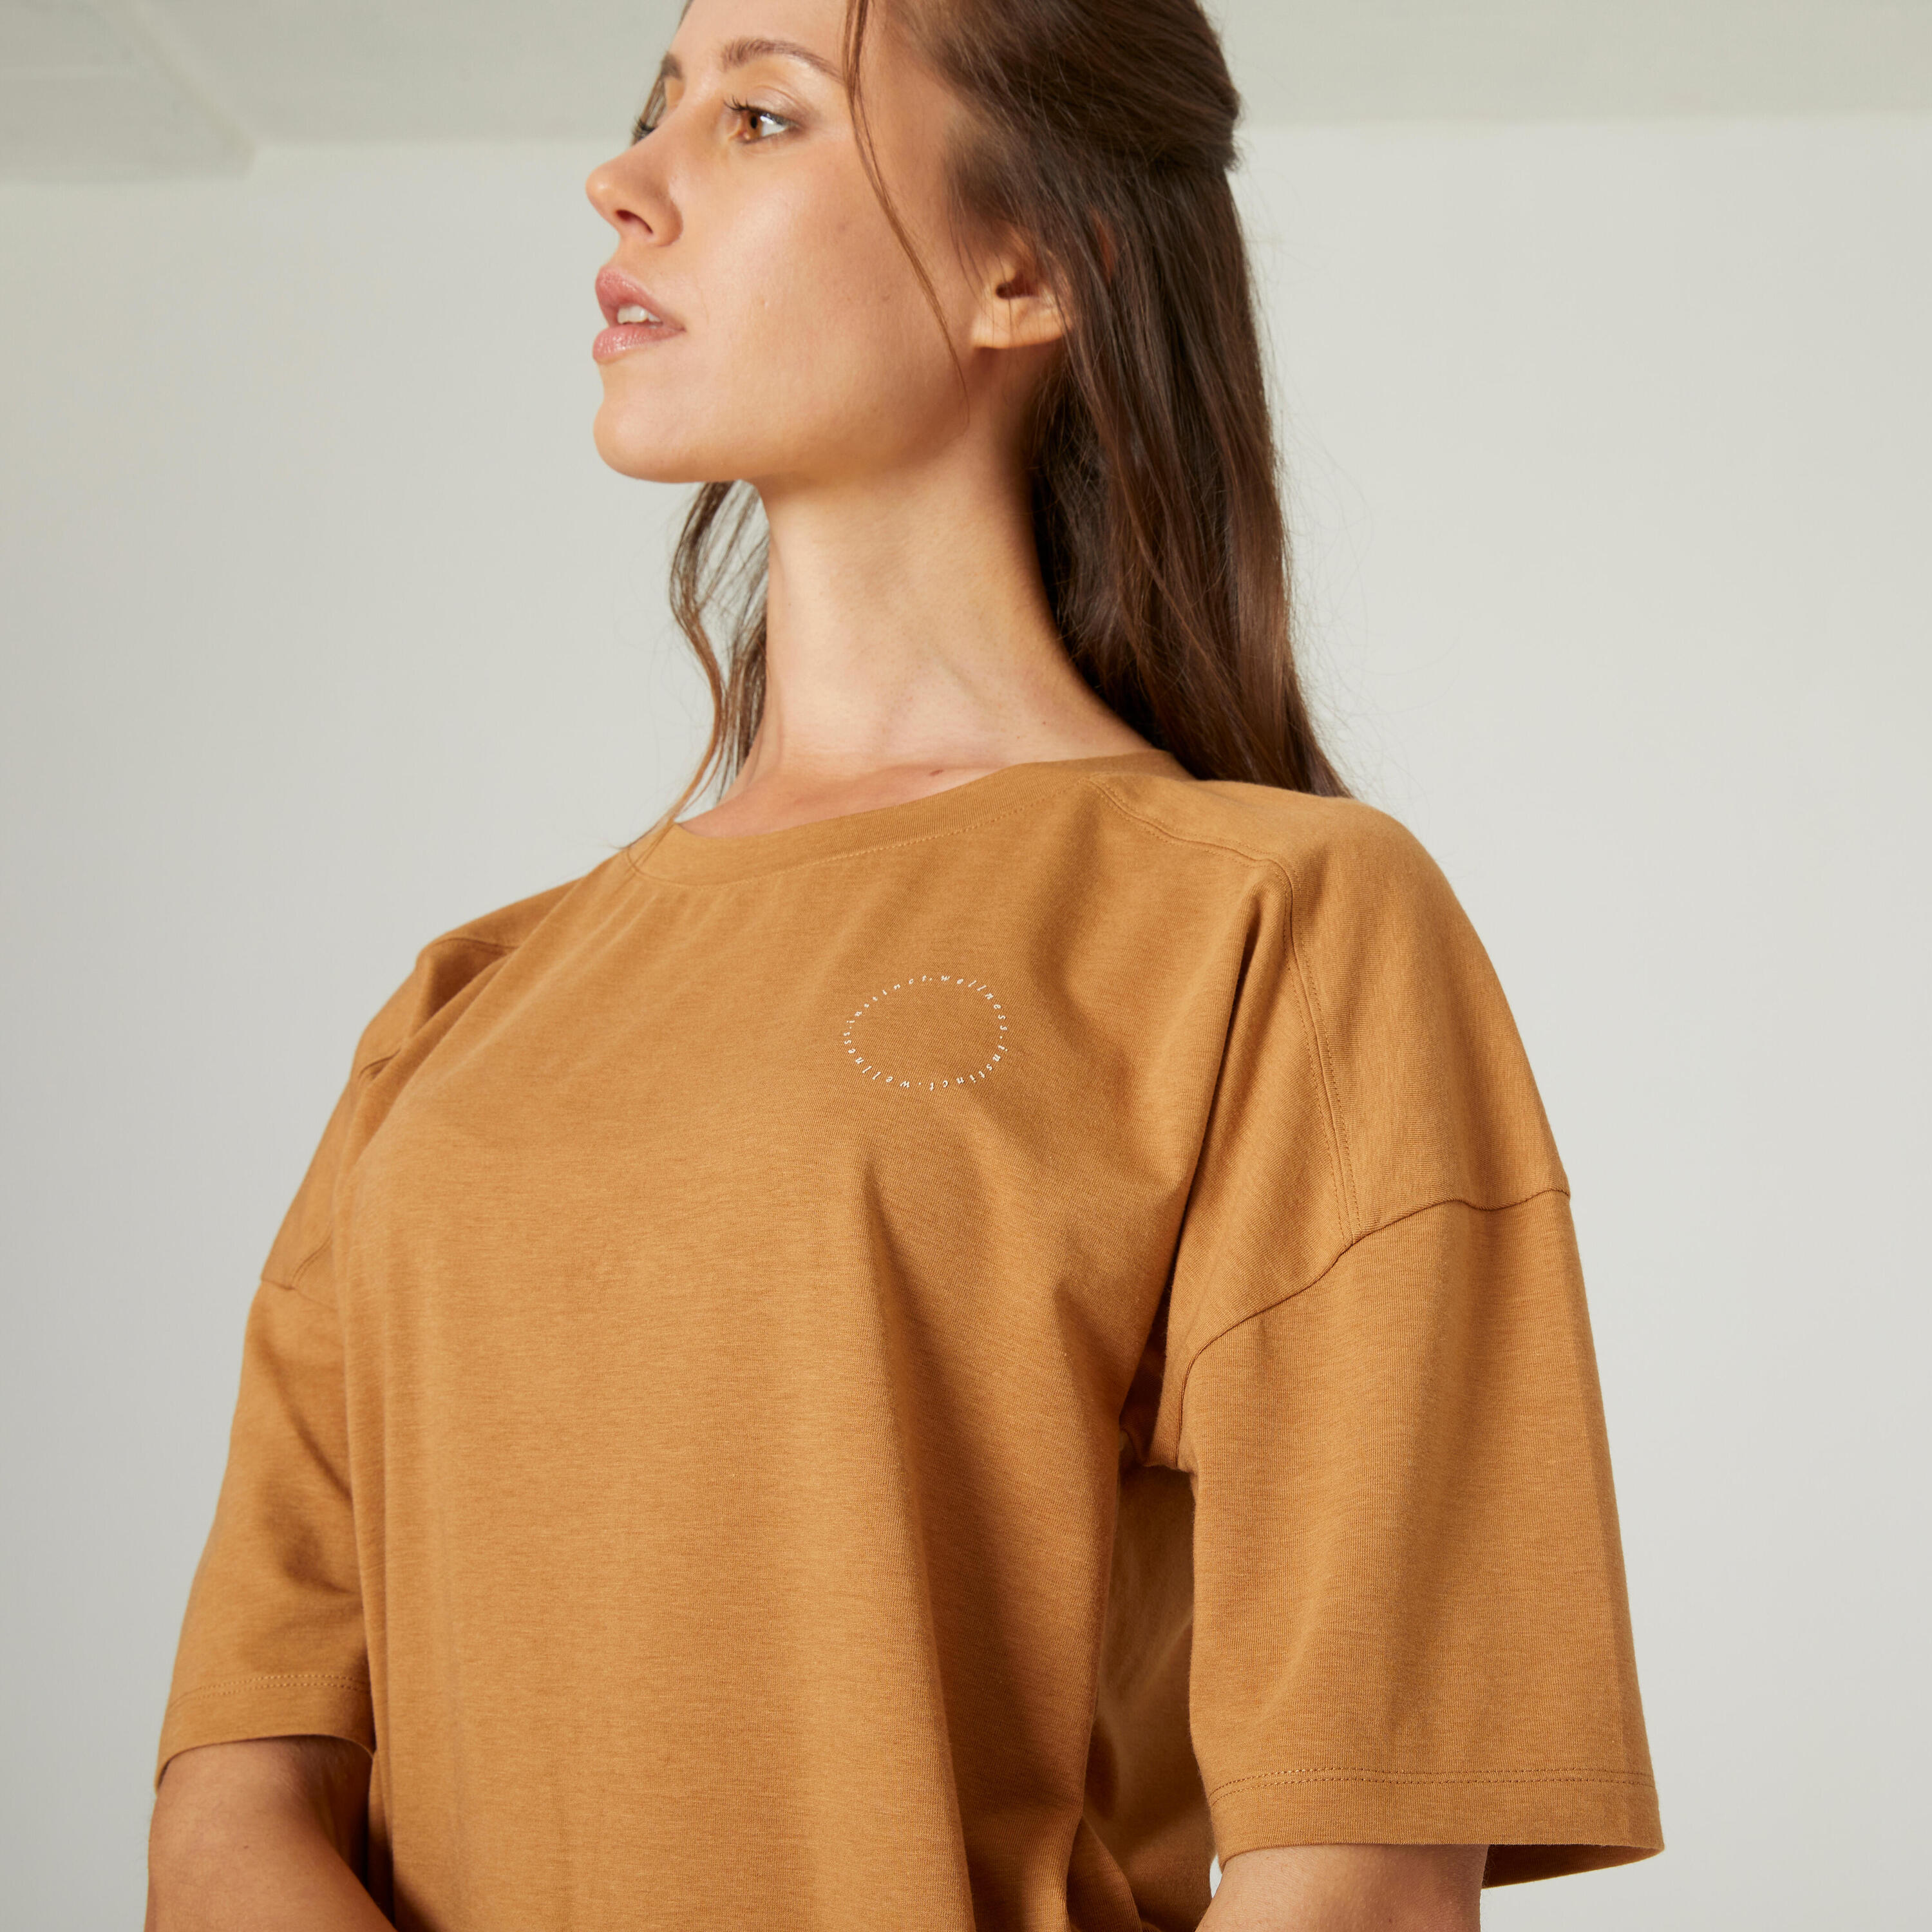 Women's Fitness Short-Sleeved Loose-Fit Cotton-Rich T-Shirt 520 - Hazelnut 6/9